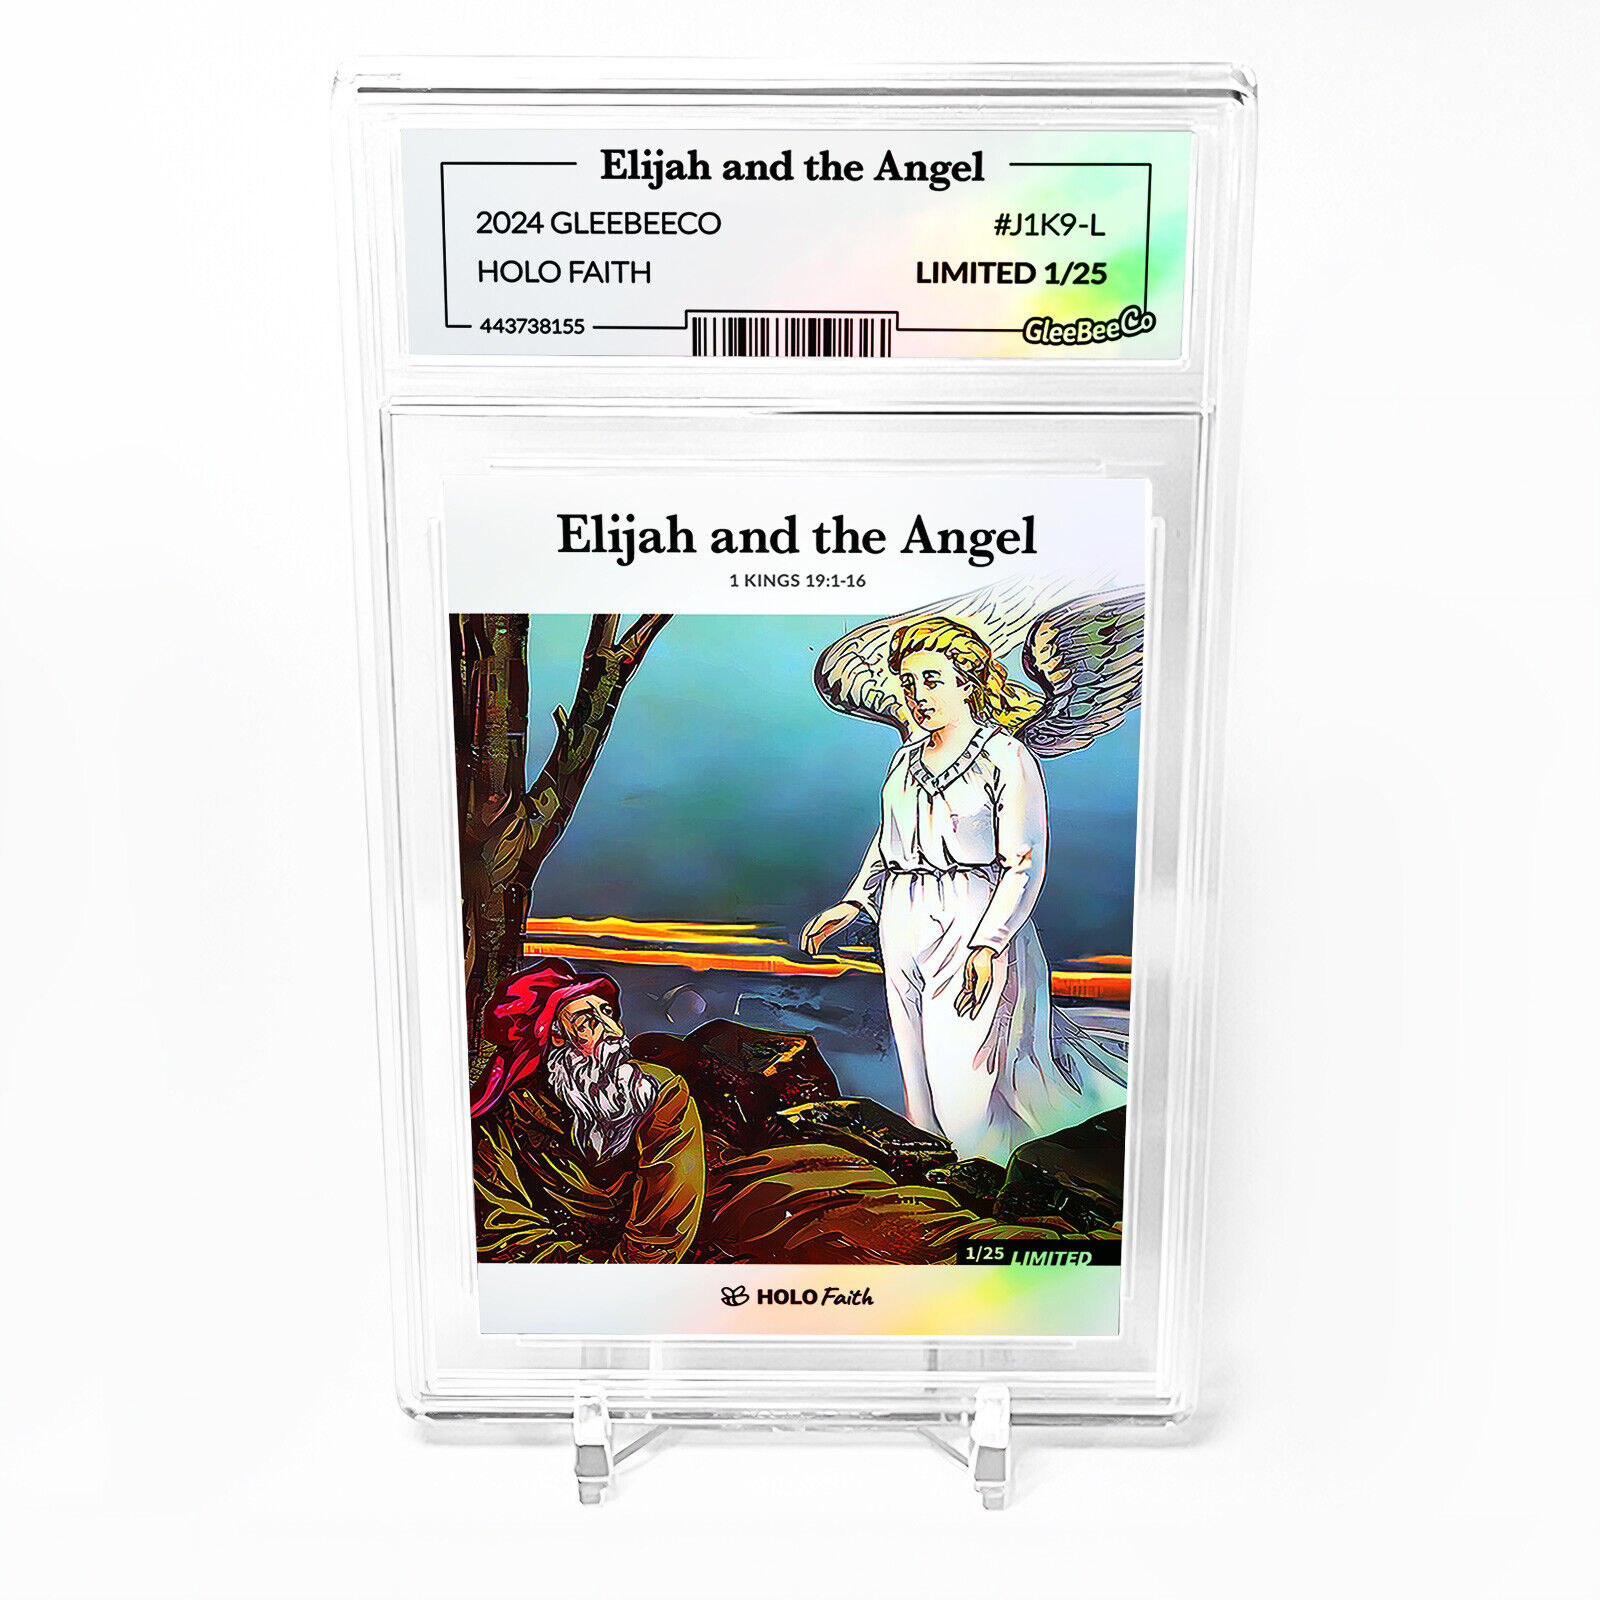 ELIJAH AND THE ANGEL Art Card 2024 GleeBeeCo Holo Faith Slabbed #J1K9-L Only /25